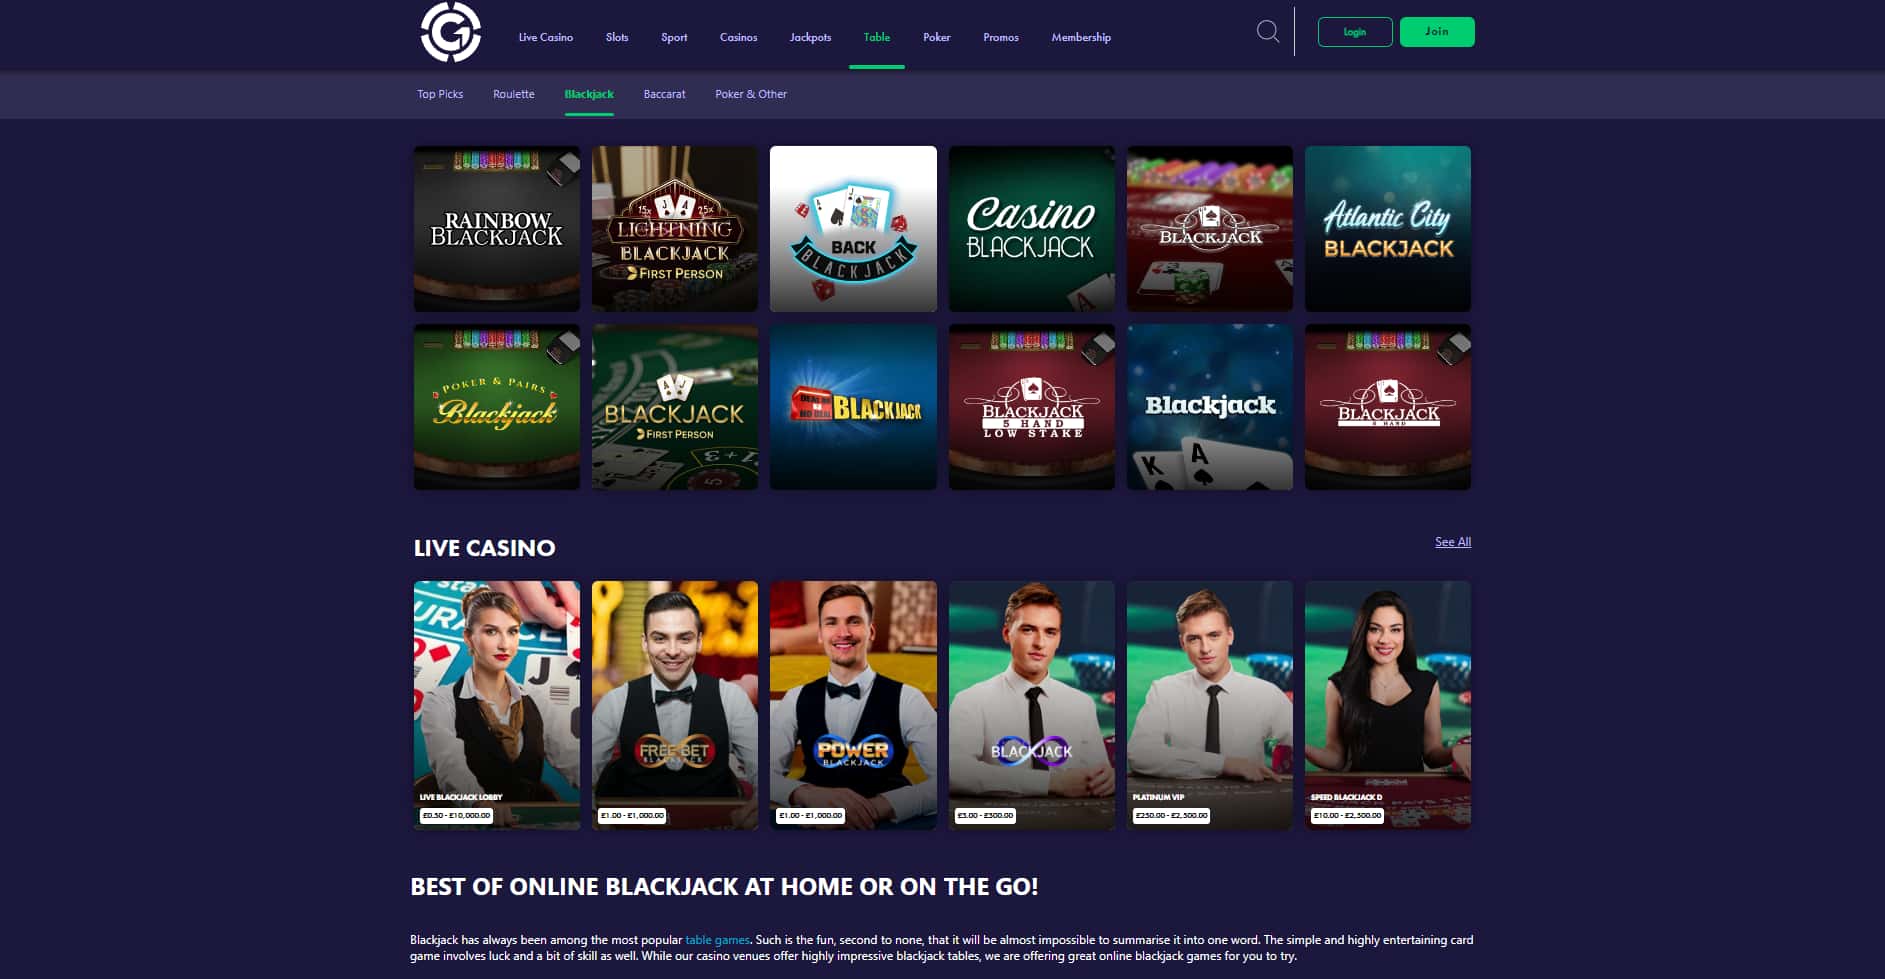 UK online blackjack casino - Grosvenor